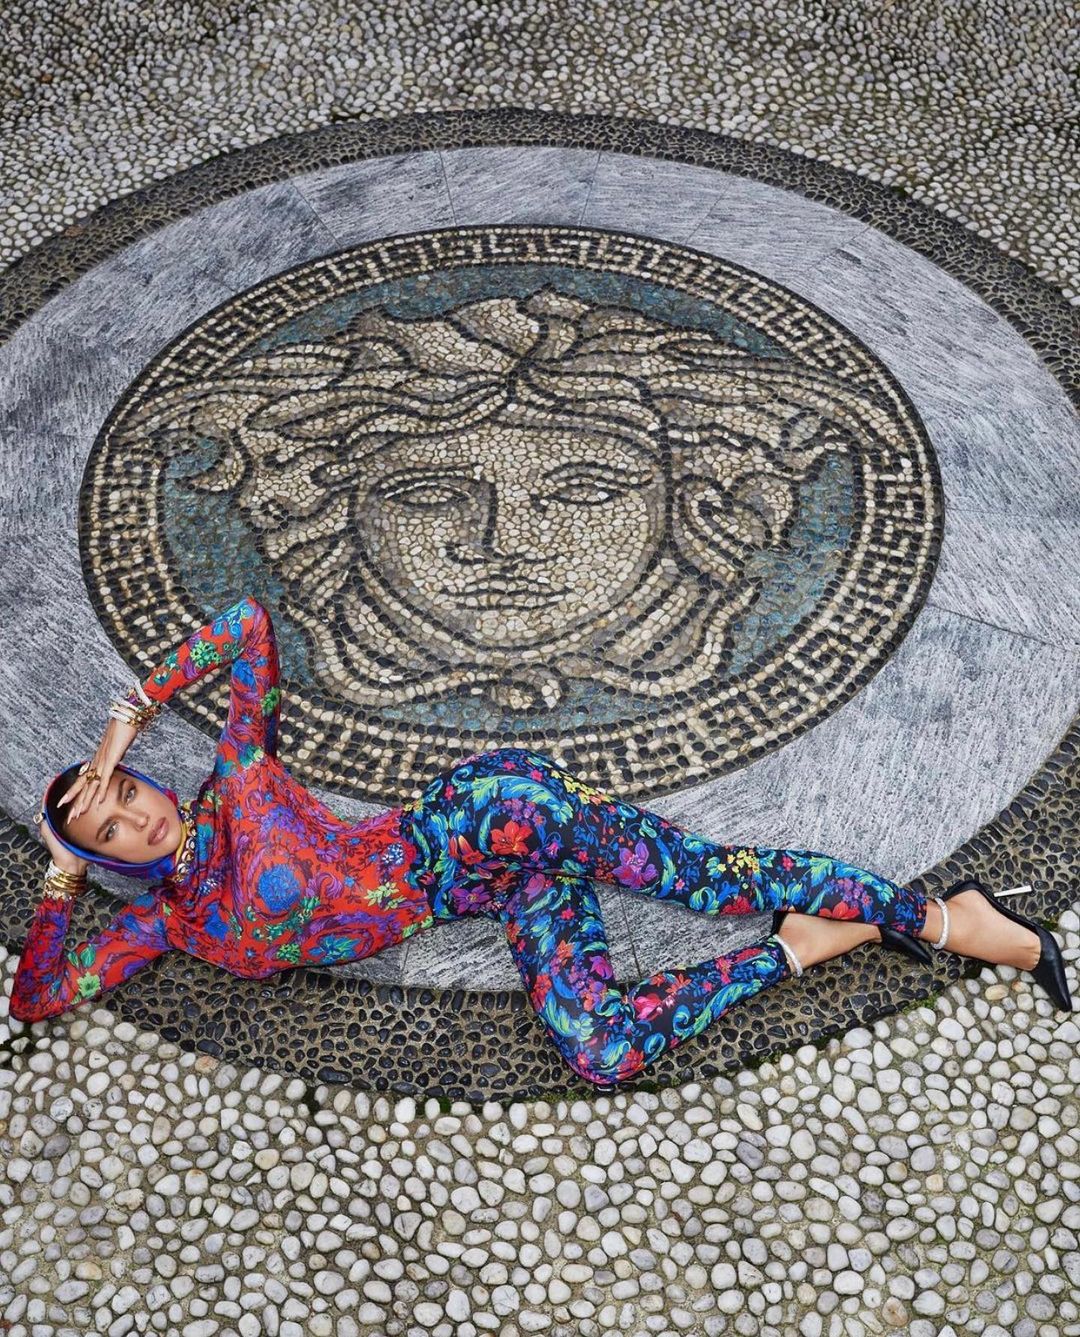 Photo n°7 : Irina Shayk est All Legs pour Versace!